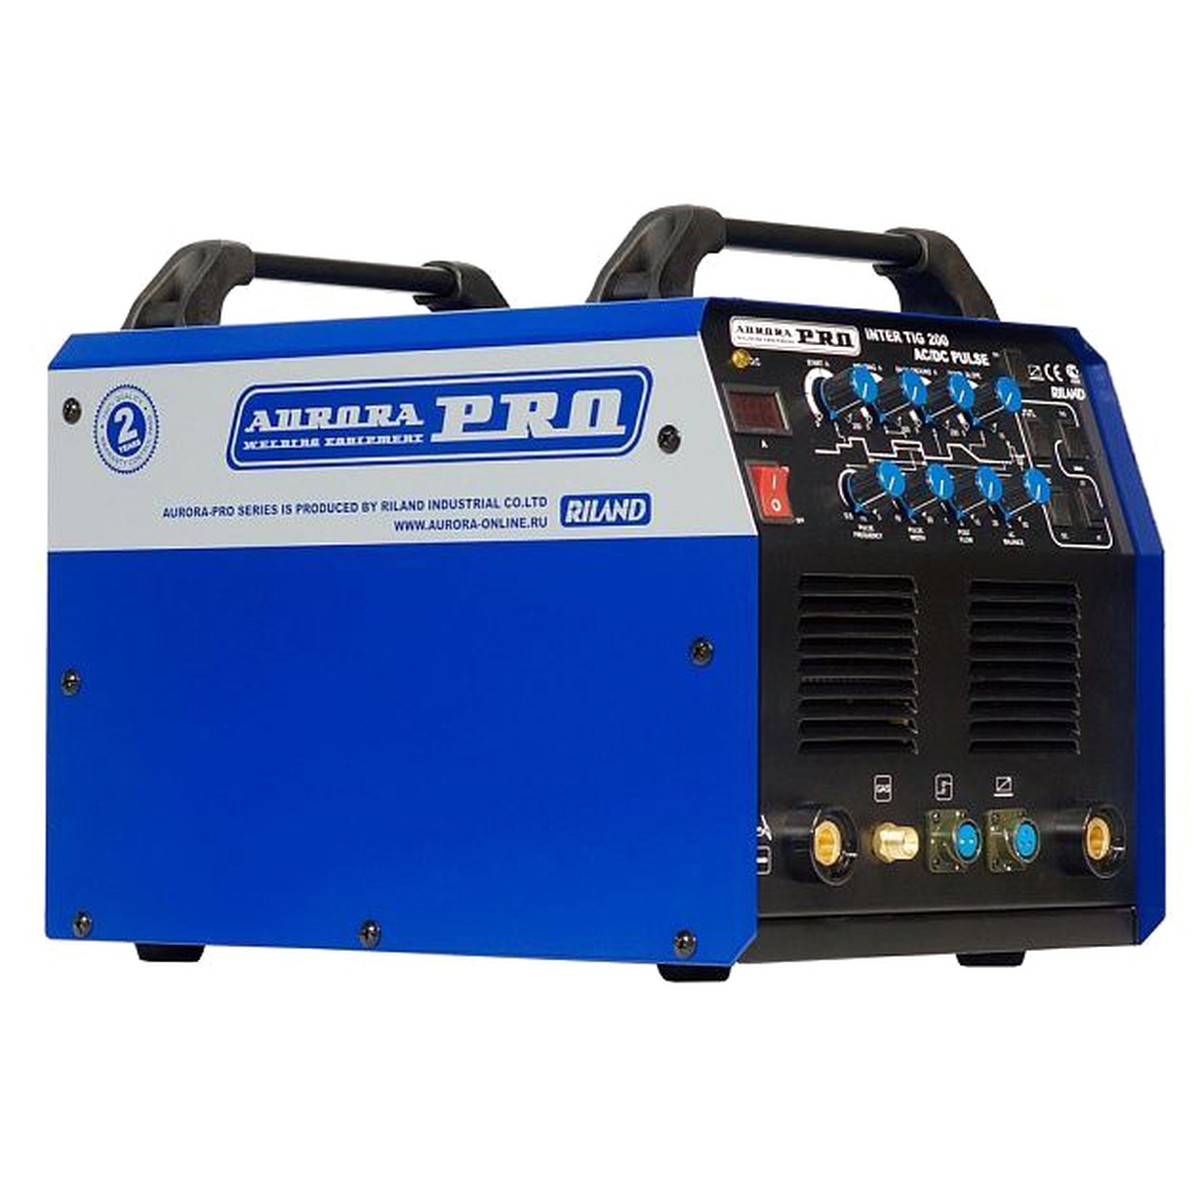 Aurora pro купить. Aurora Pro Inter Tig 200 AC/DC Pulse. Aurora Pro Tig 200 AC/DC Pulse. Aurora Inter Tig 200 AC/DC.